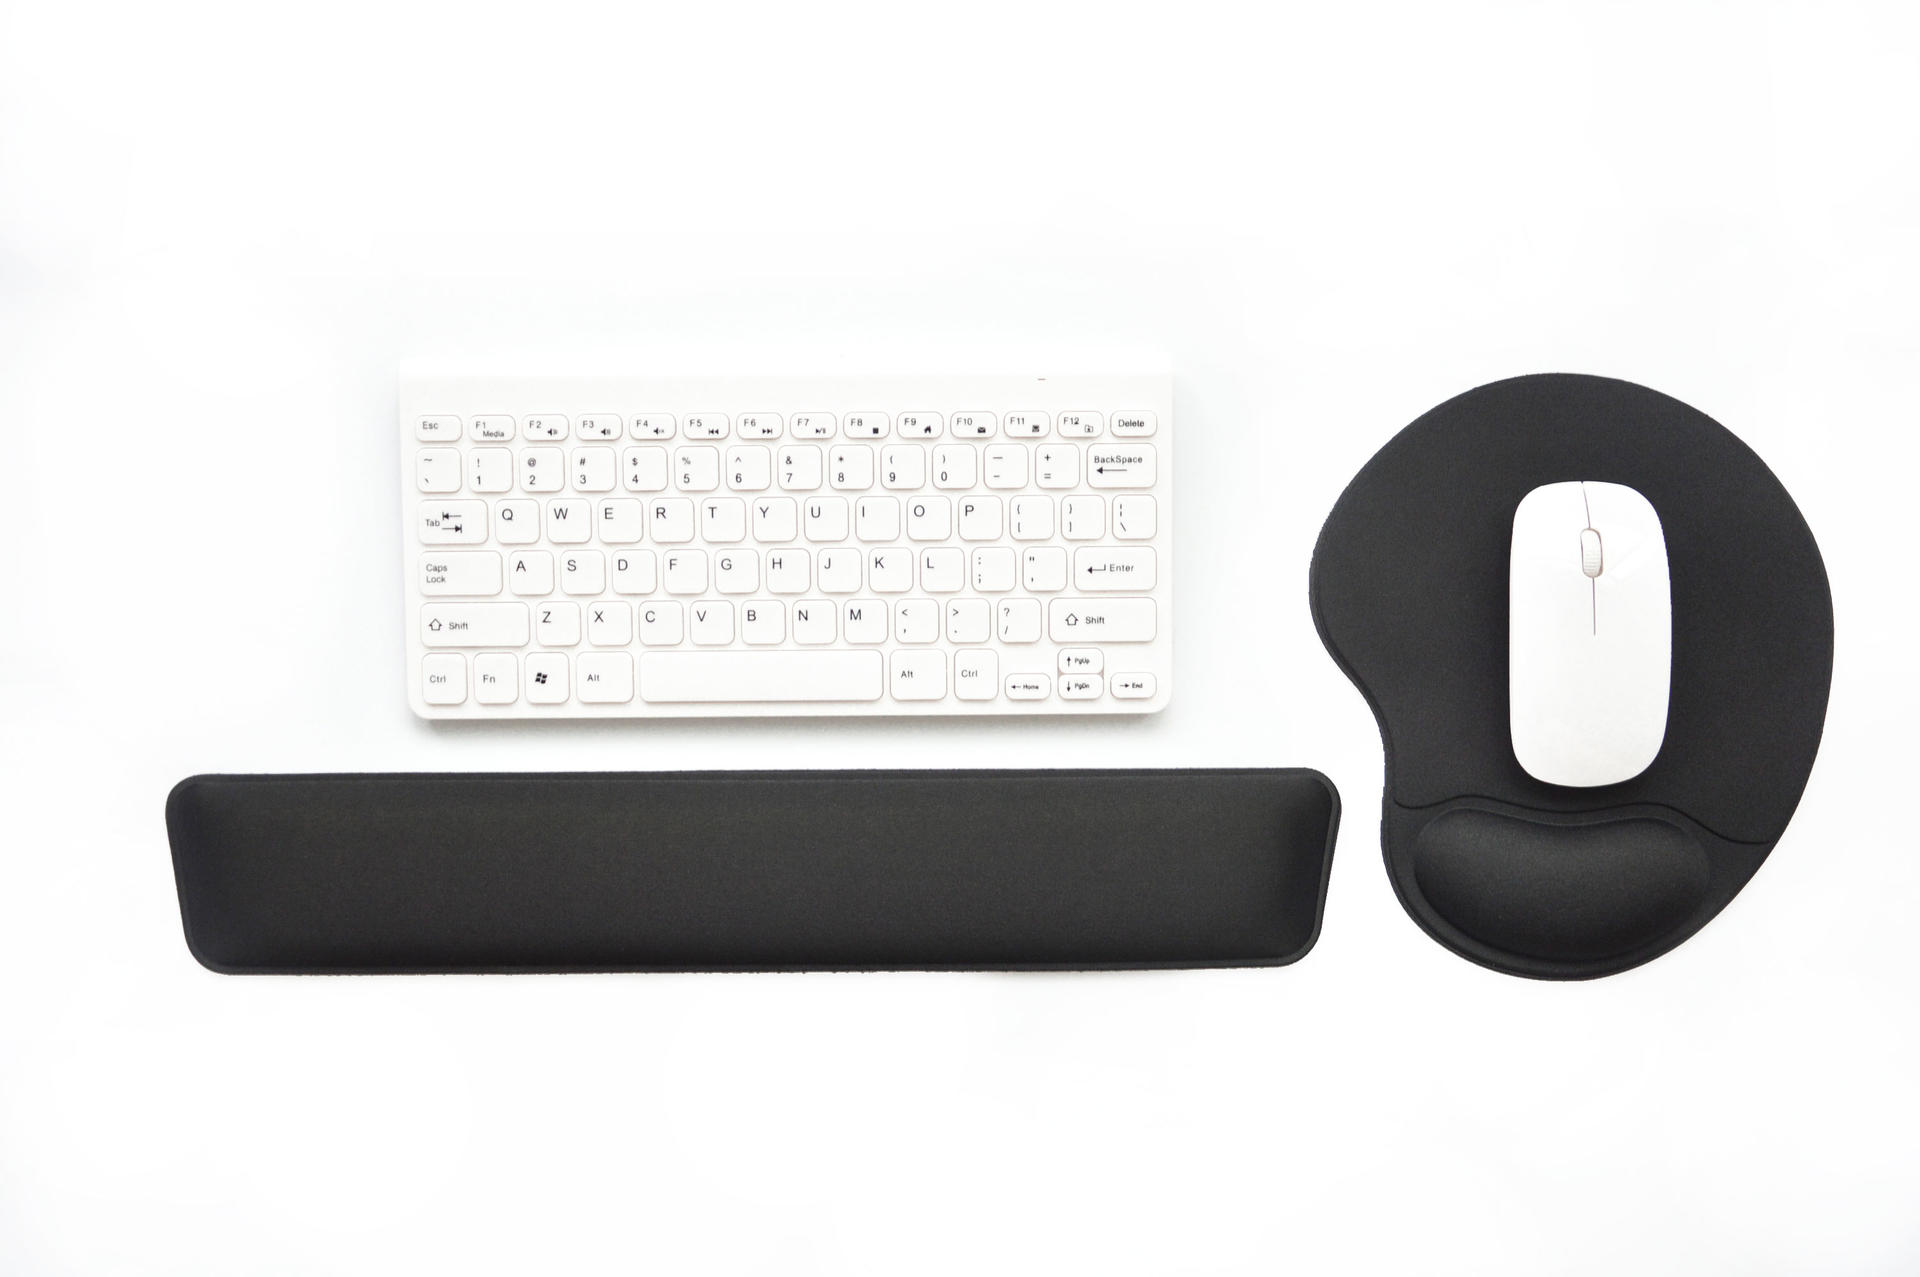 Memory foam wrist rest keyboard pad and wrist ergonomic support mouse pad set